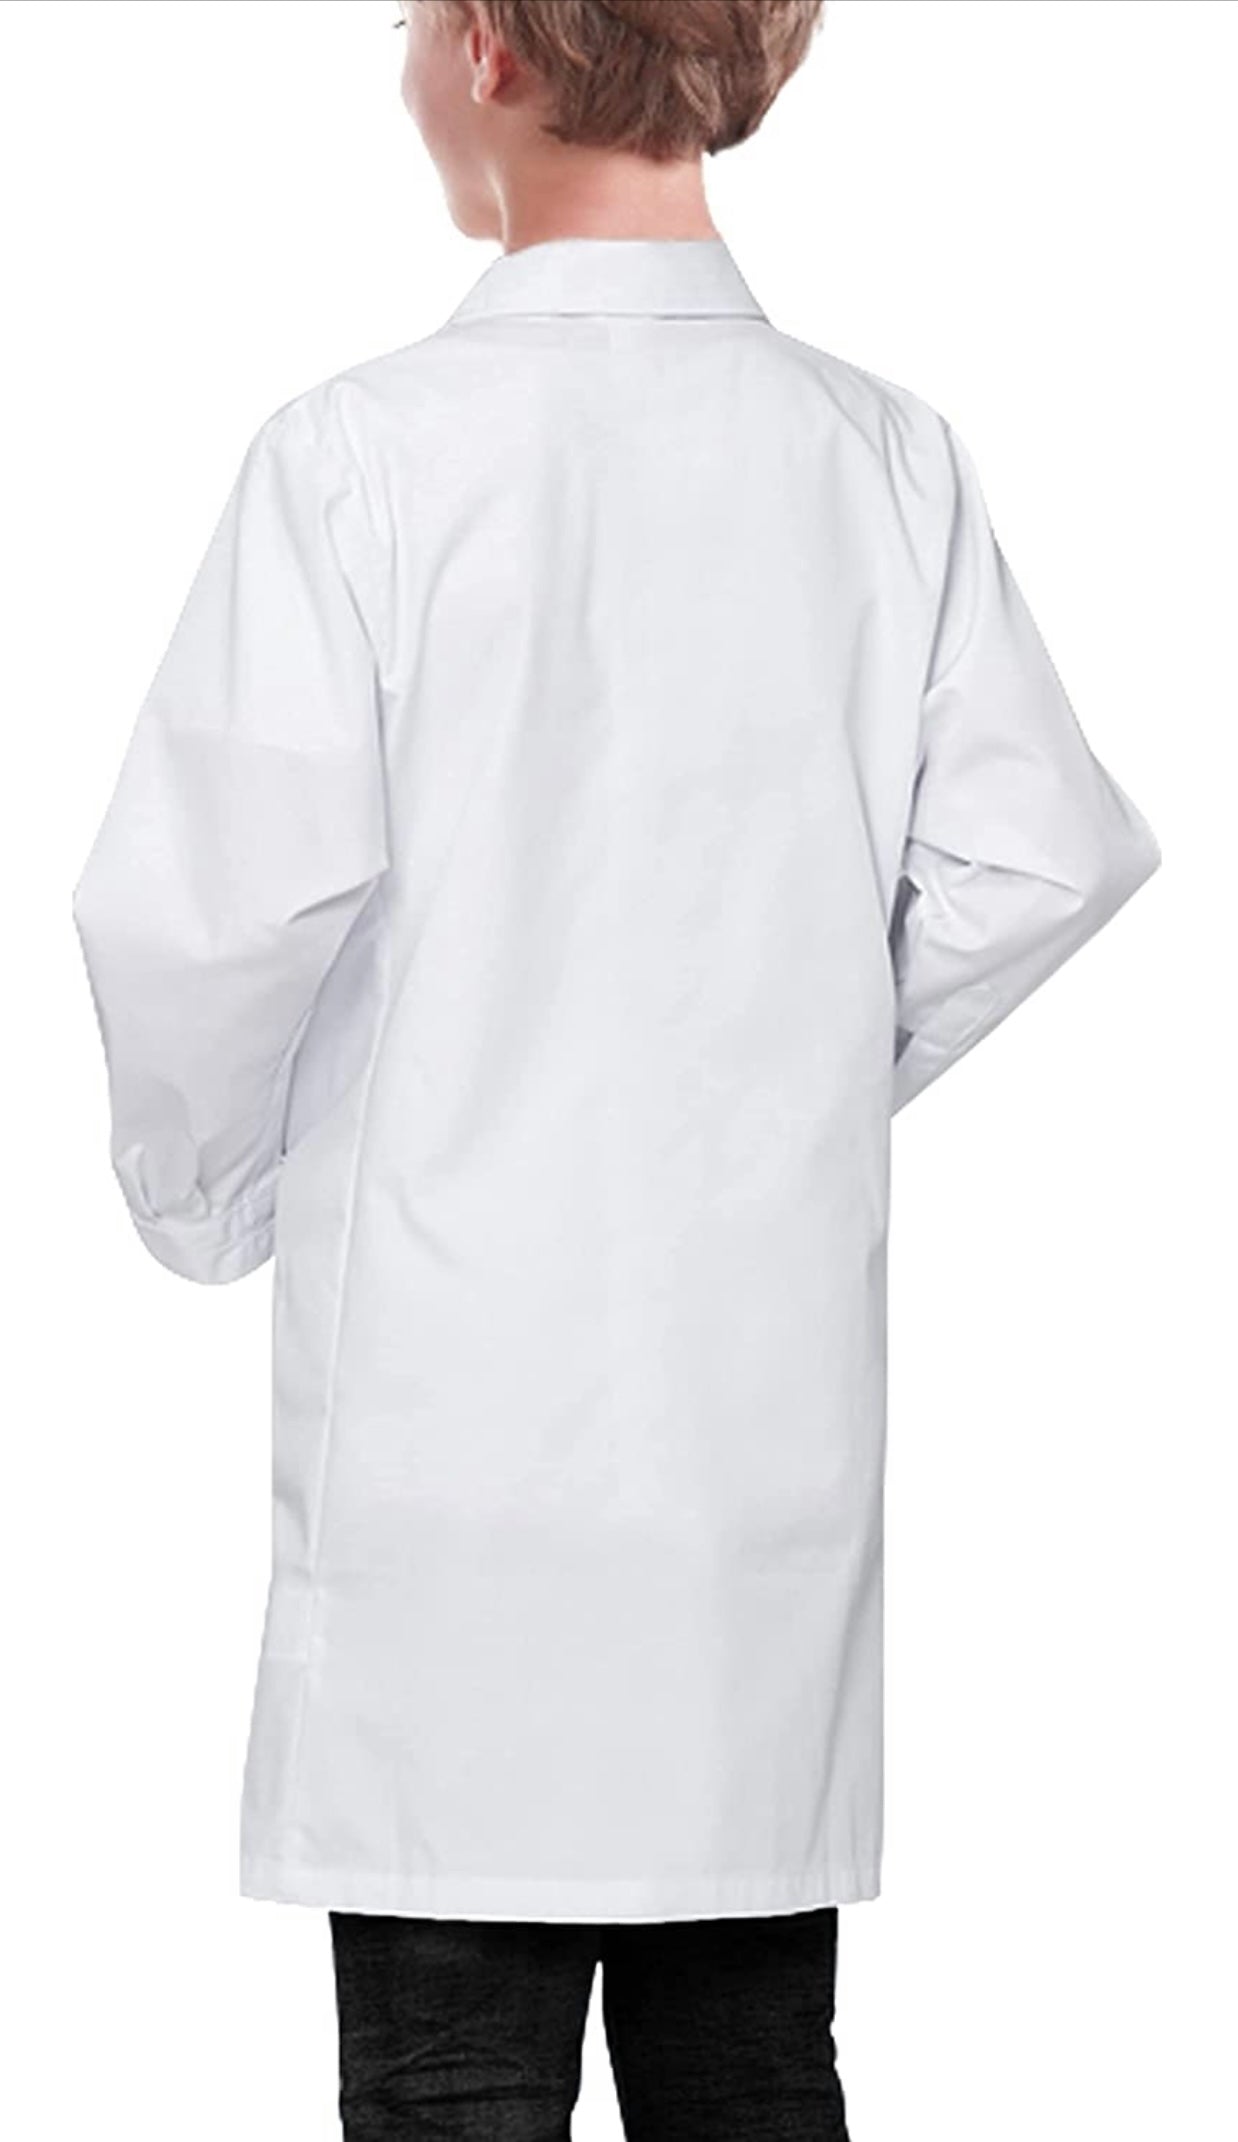 YOUTH STEM lab coat 